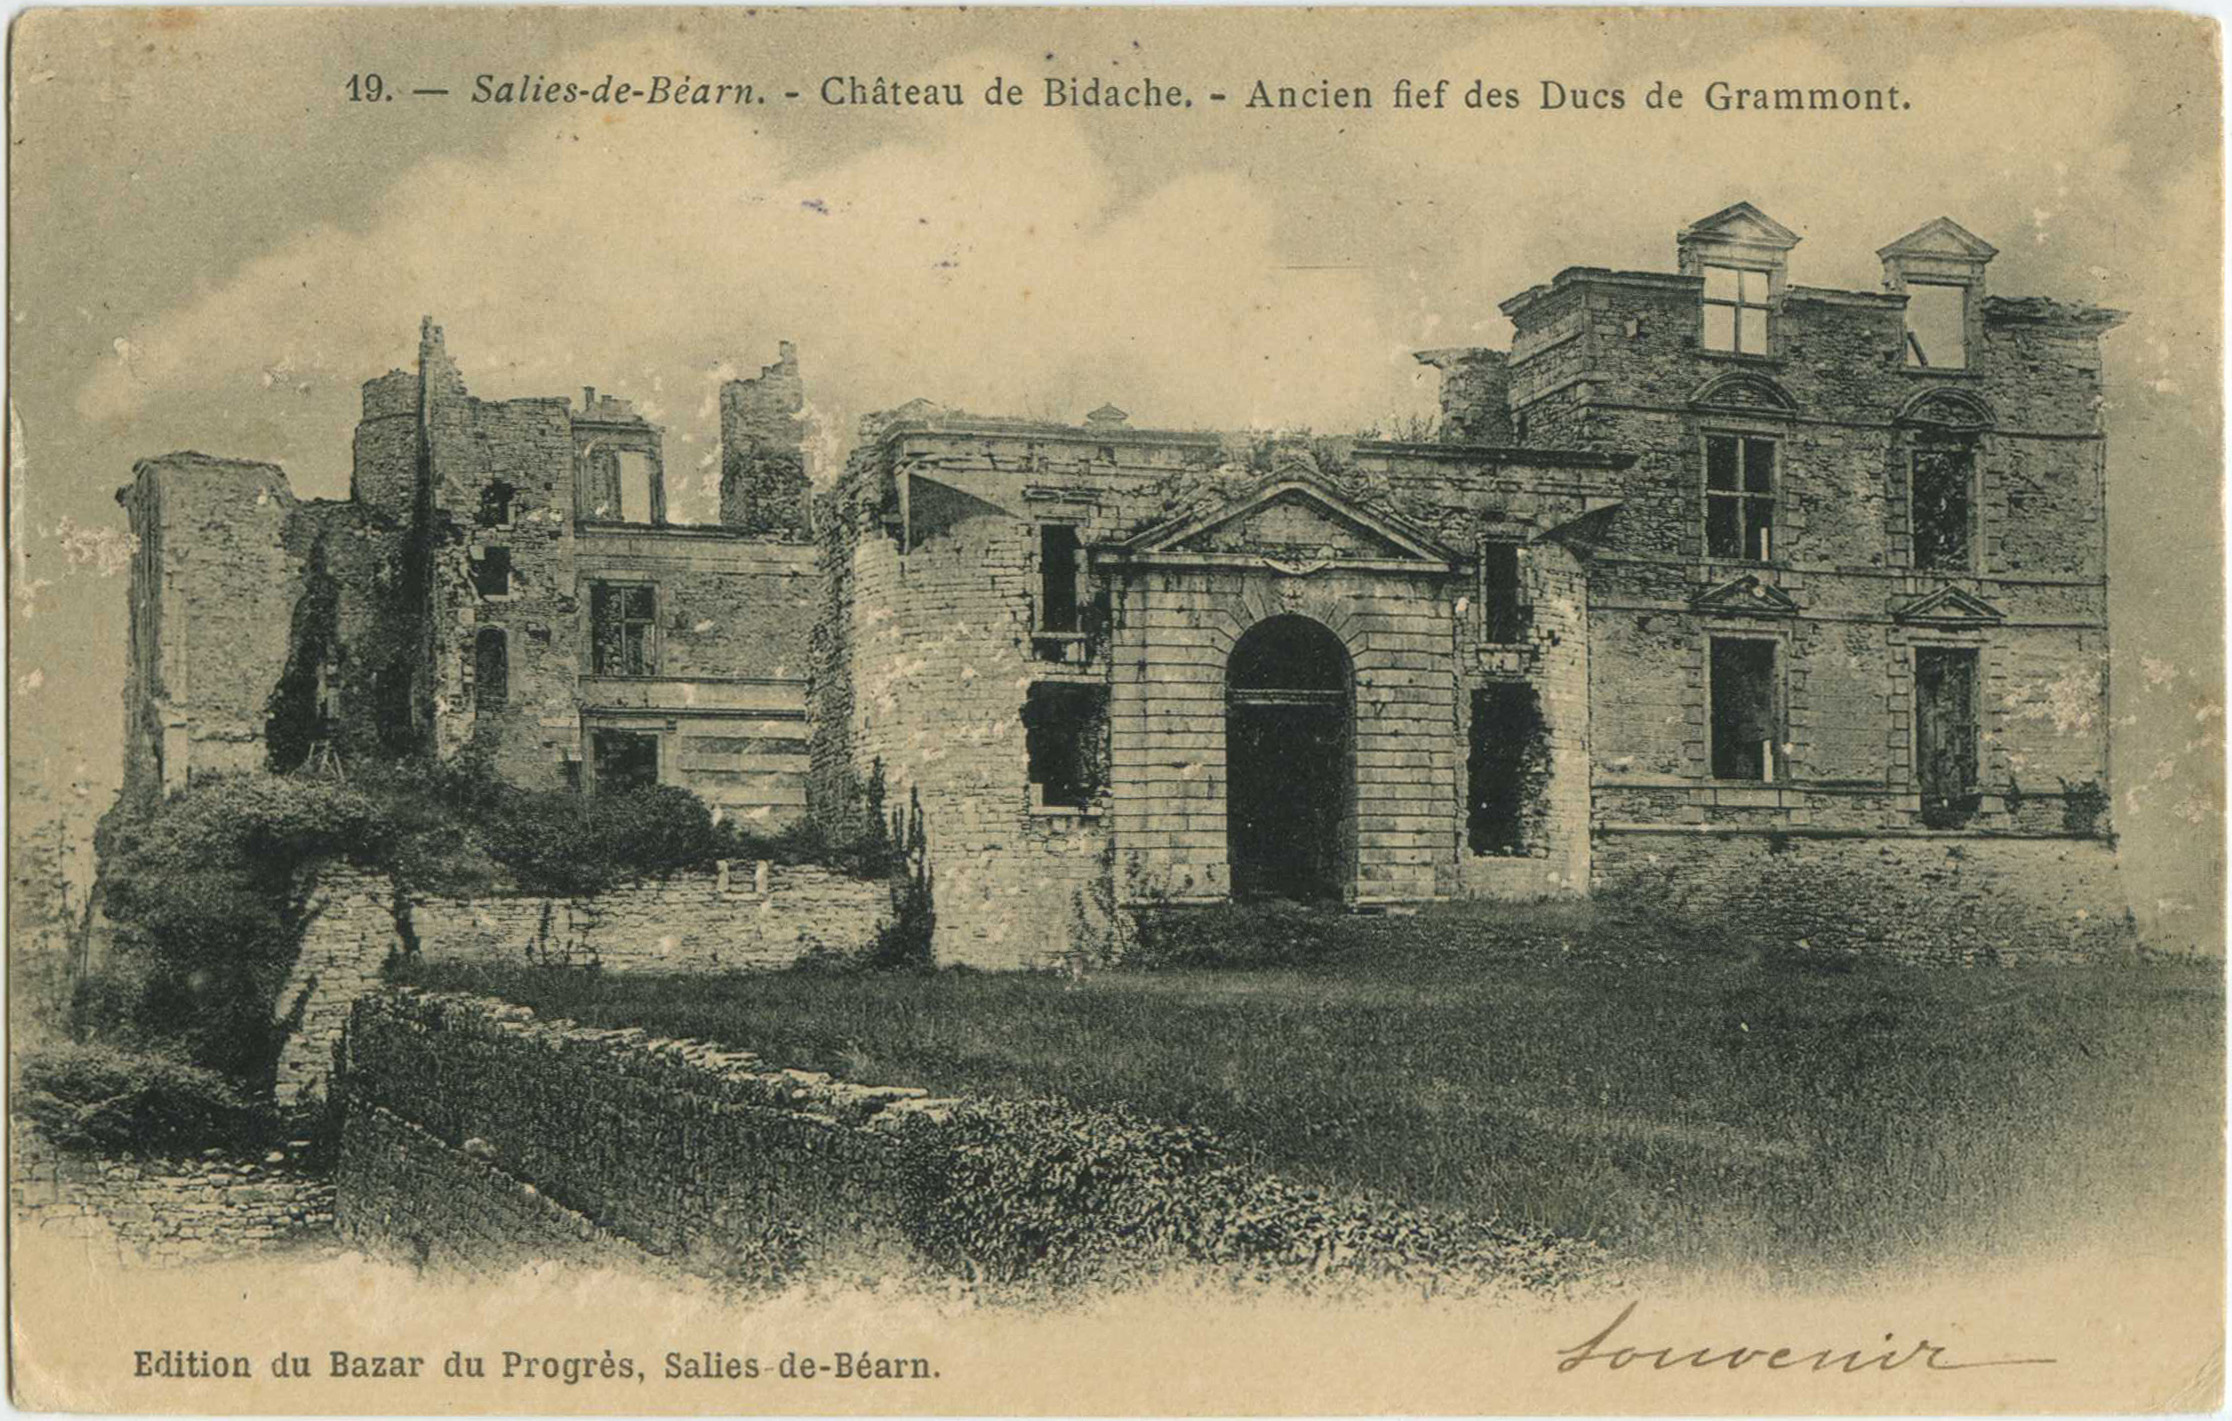 Bidache - Château de Bidache - Ancien fief des Ducs de Grammont